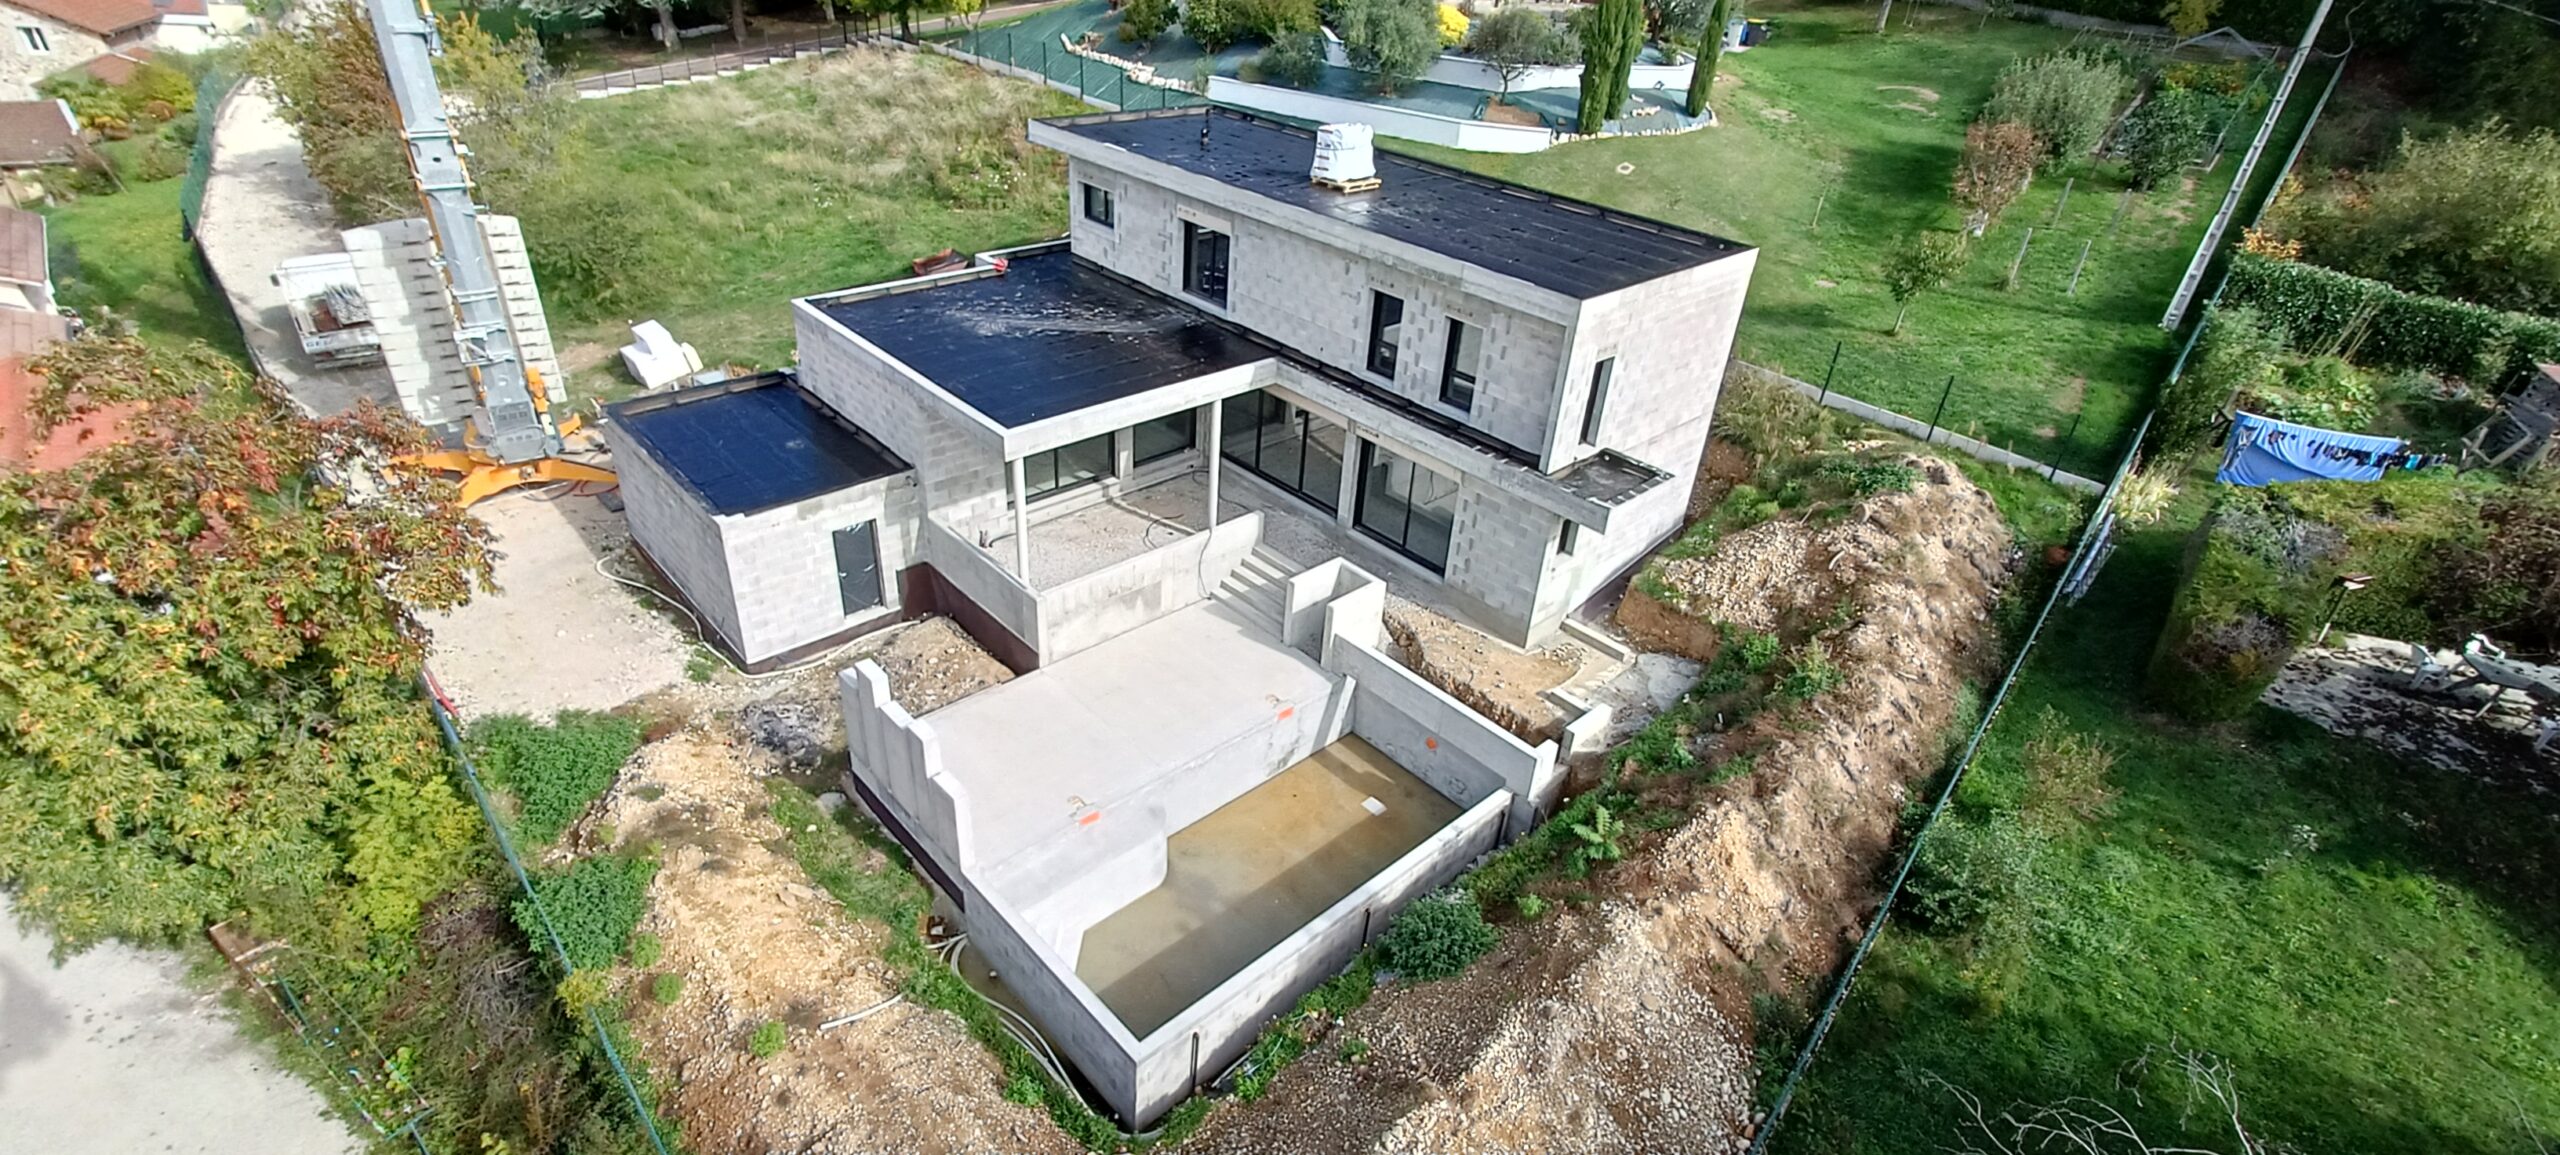 Maison d’architecte avec toitures terrasses, piscine et terrasse